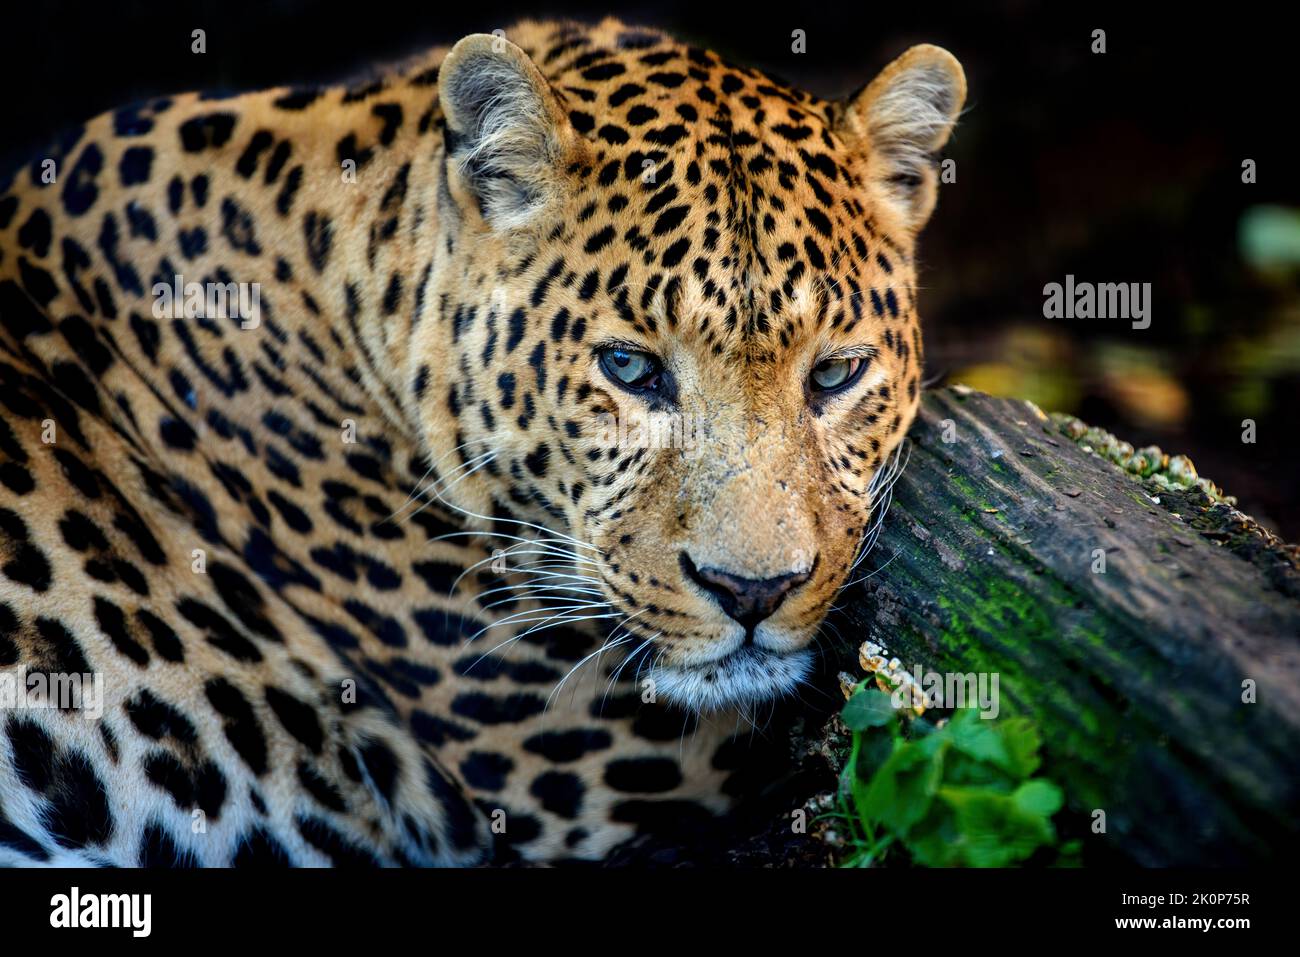 Léopard, animal sauvage dans l'habitat naturel. Gros chat en forêt Banque D'Images